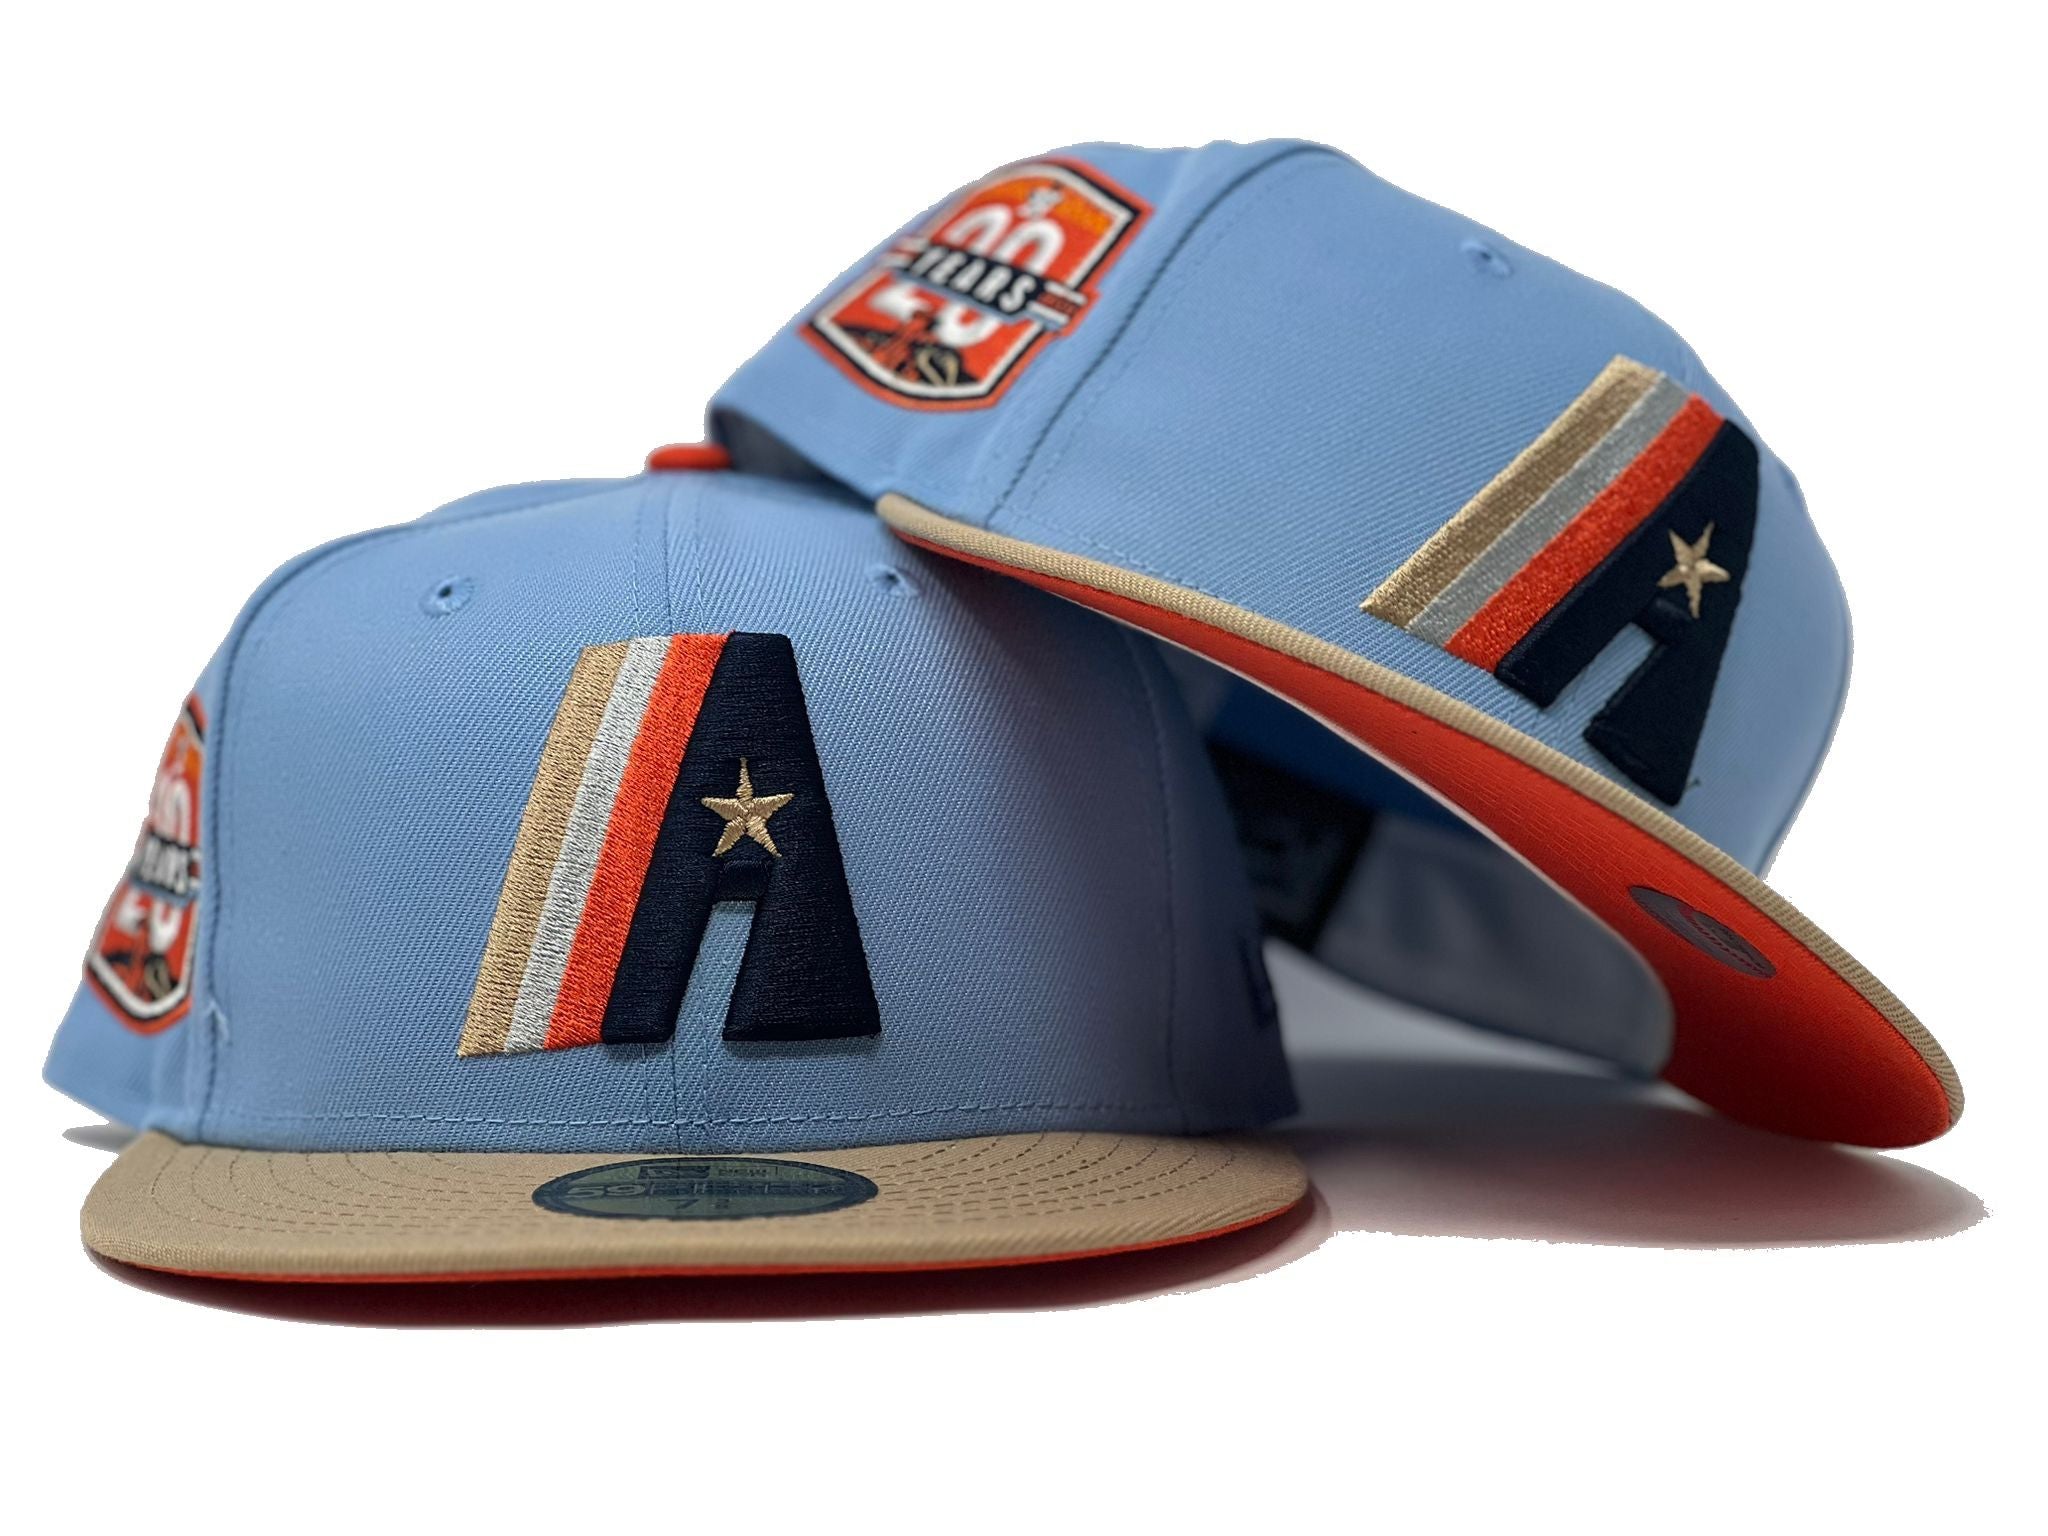 Houston Astros New Era 59FIFTY Fitted Hat - Cream/Orange